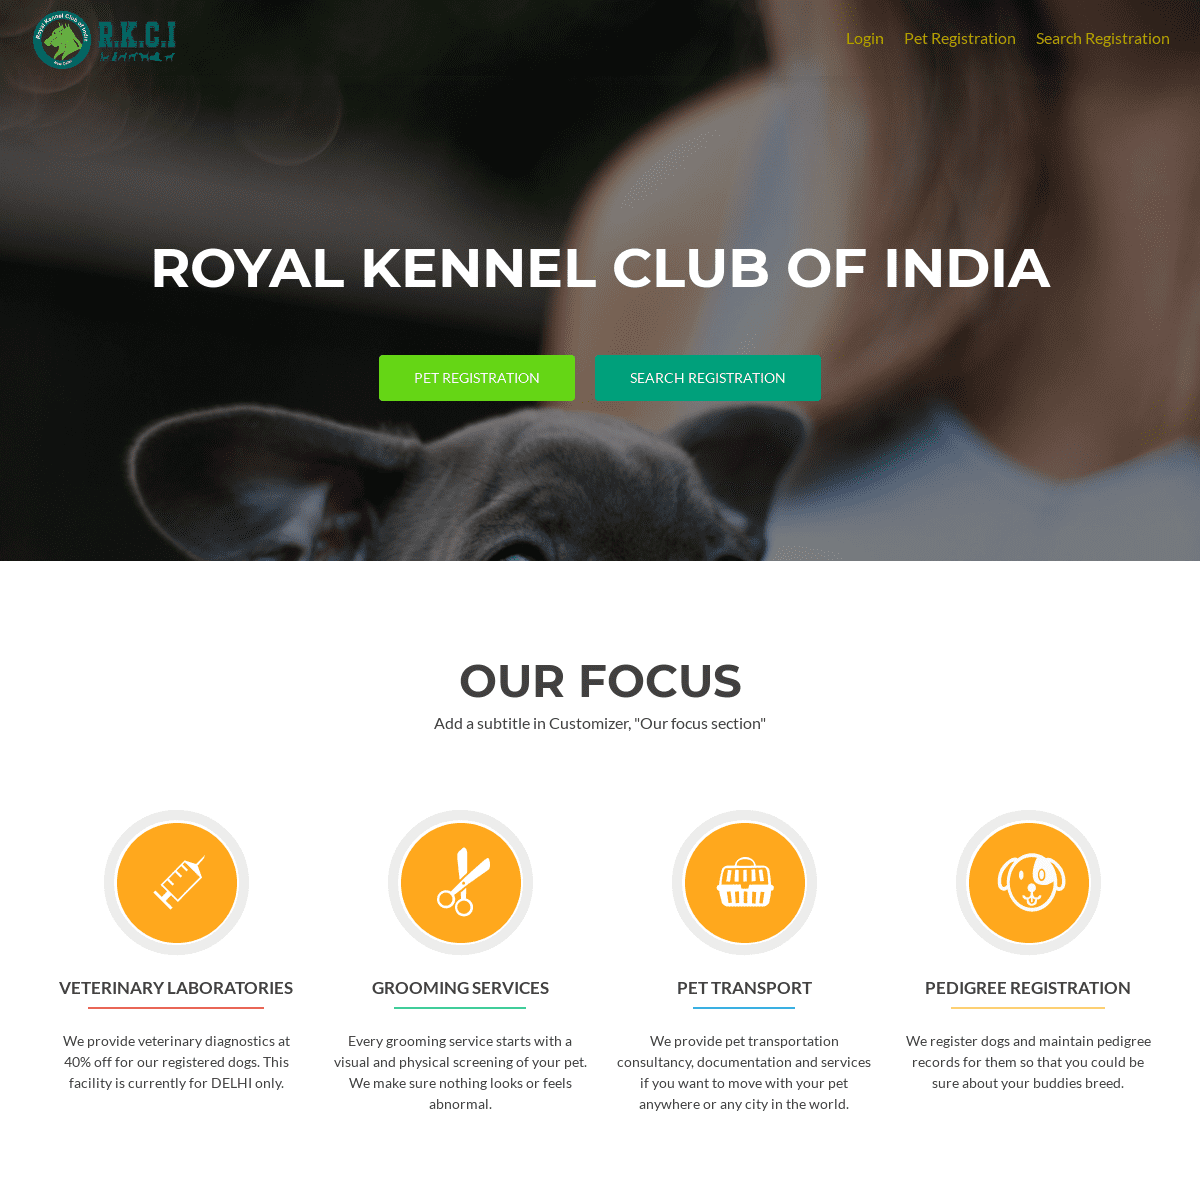 Royal Kennel Club Of India - Royal Kennel Club Of India